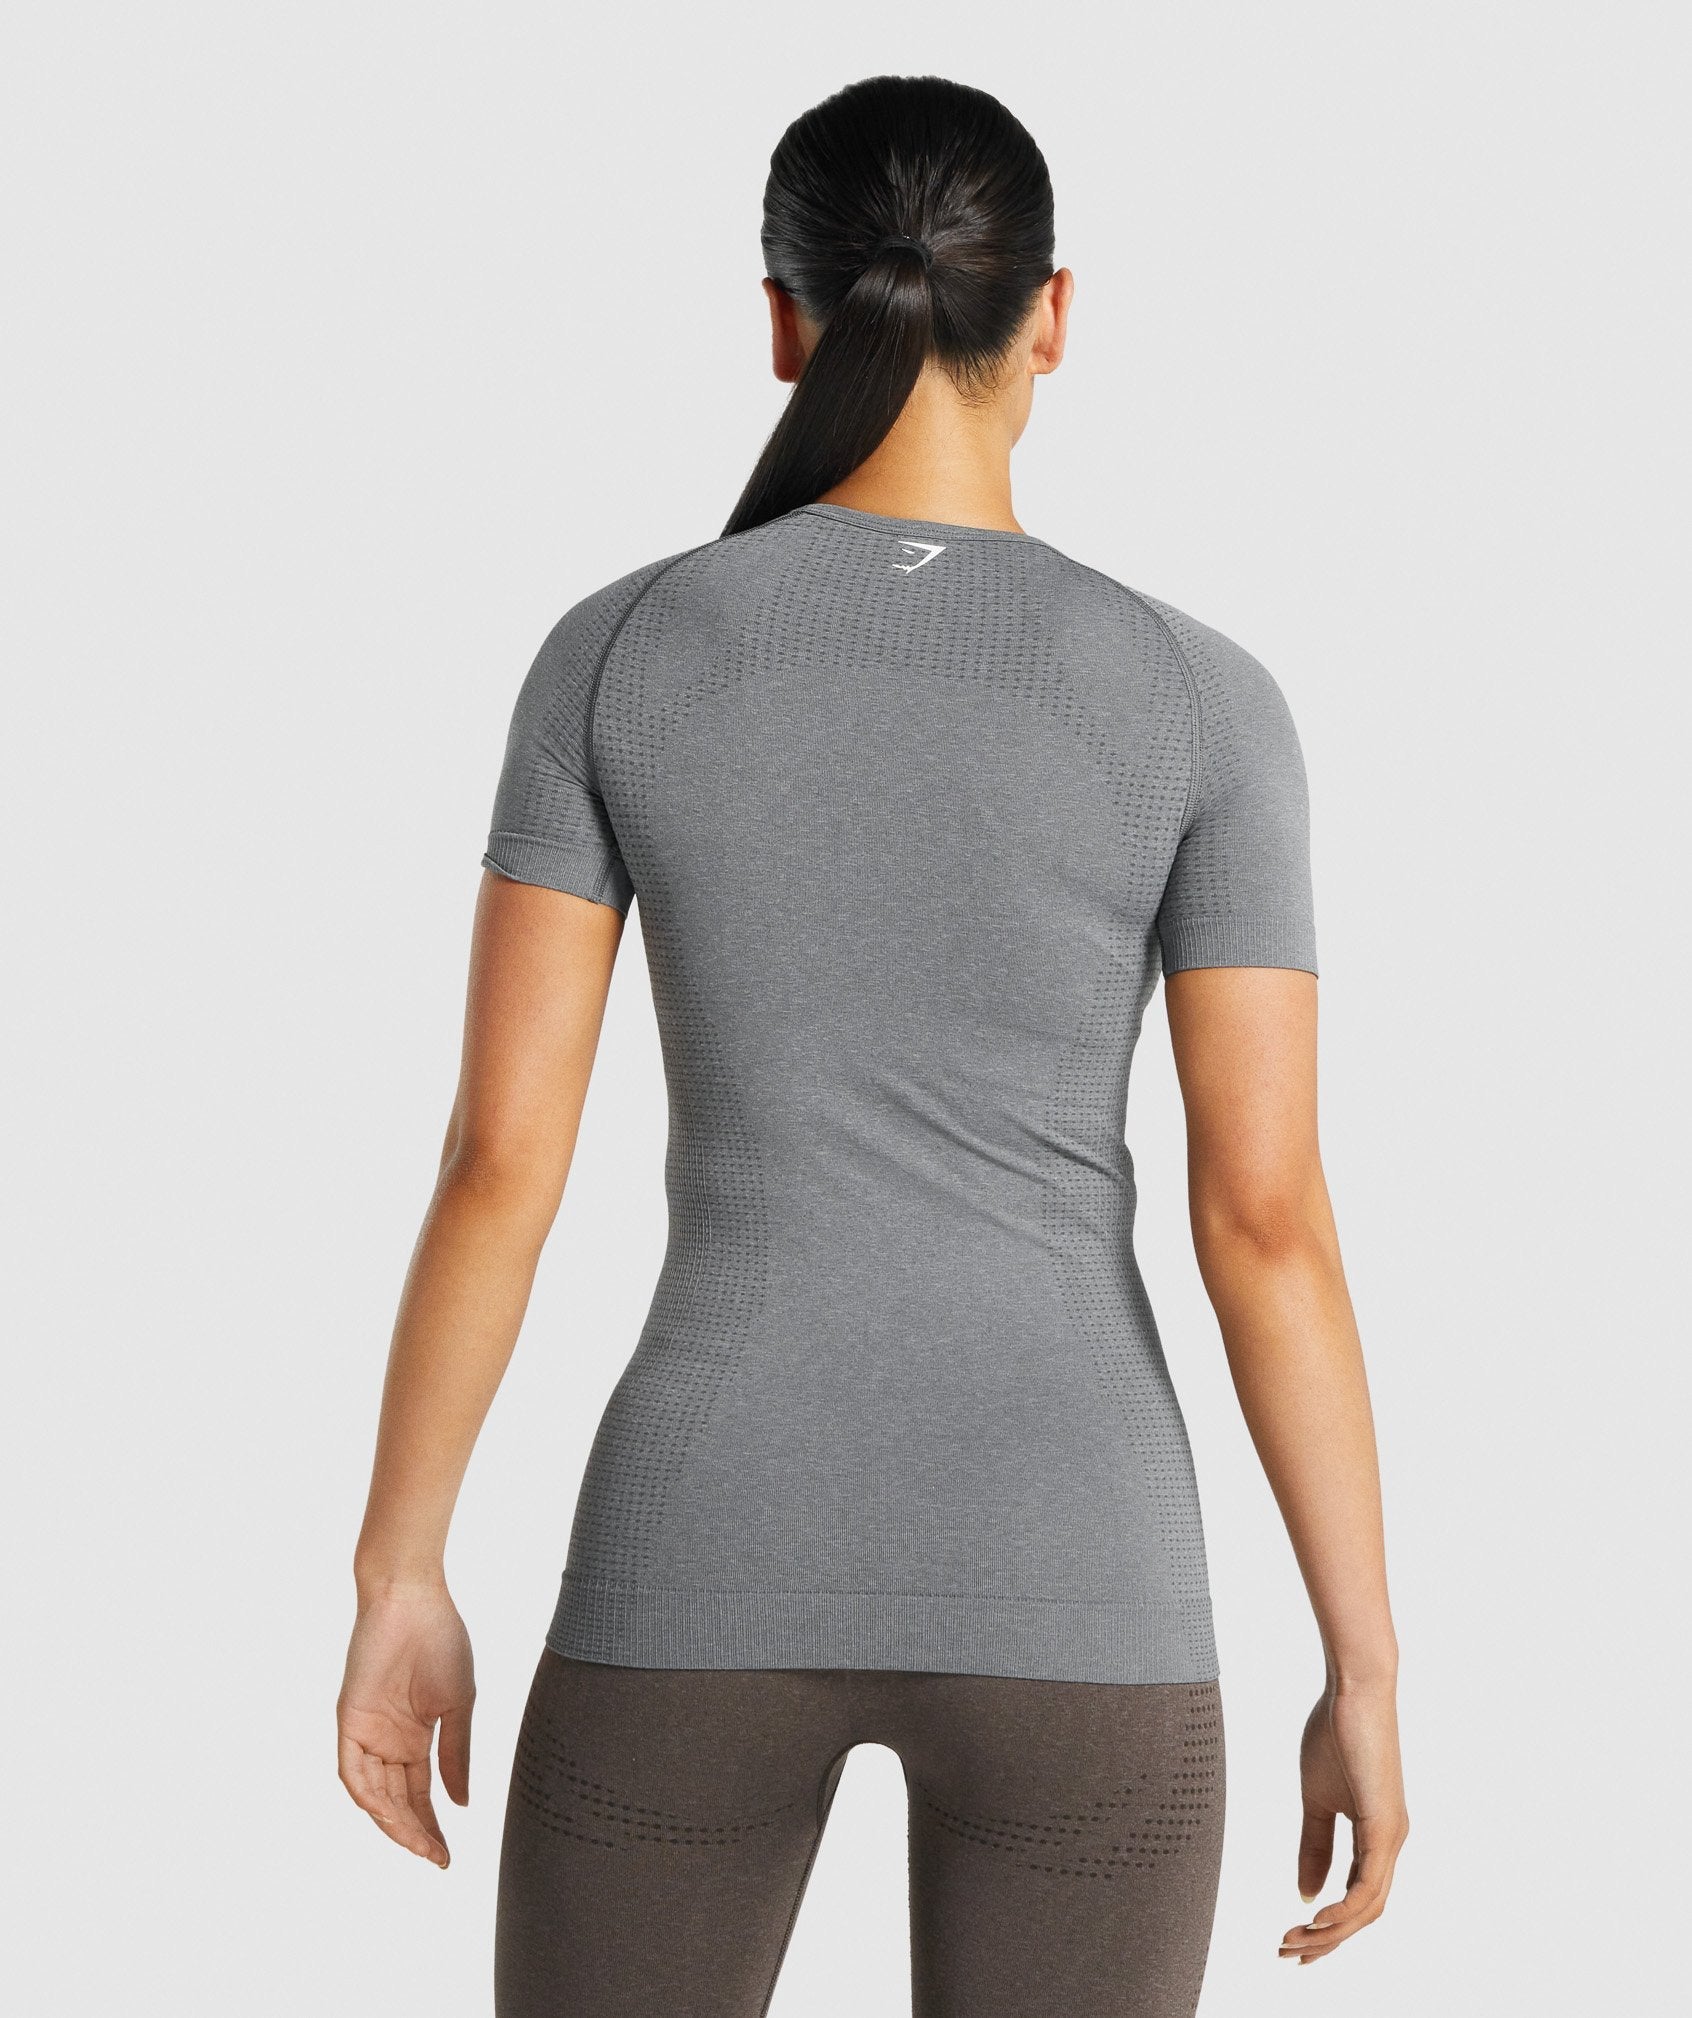 Vital Seamless 2.0 T-Shirt in Smokey Grey Marl - view 2